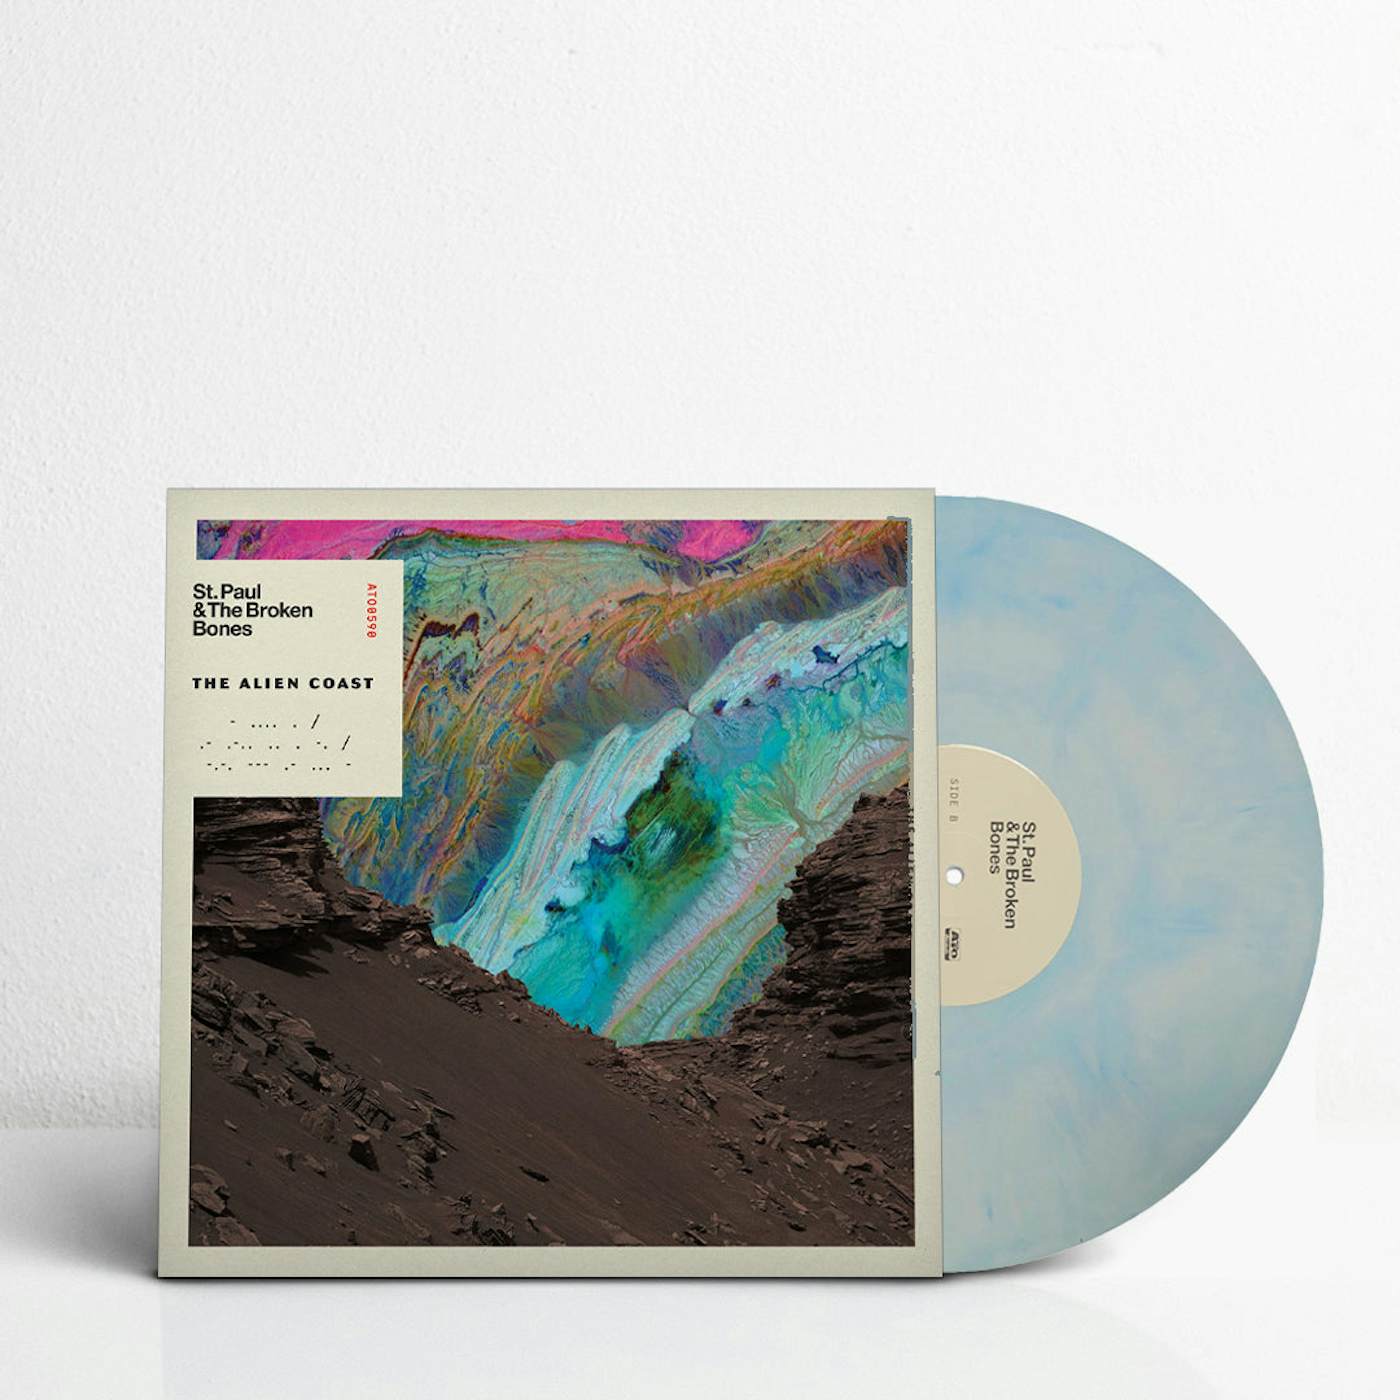 St. Paul & The Broken Bones The Alien Coast (Exclusive Ghostly Blue Vinyl)